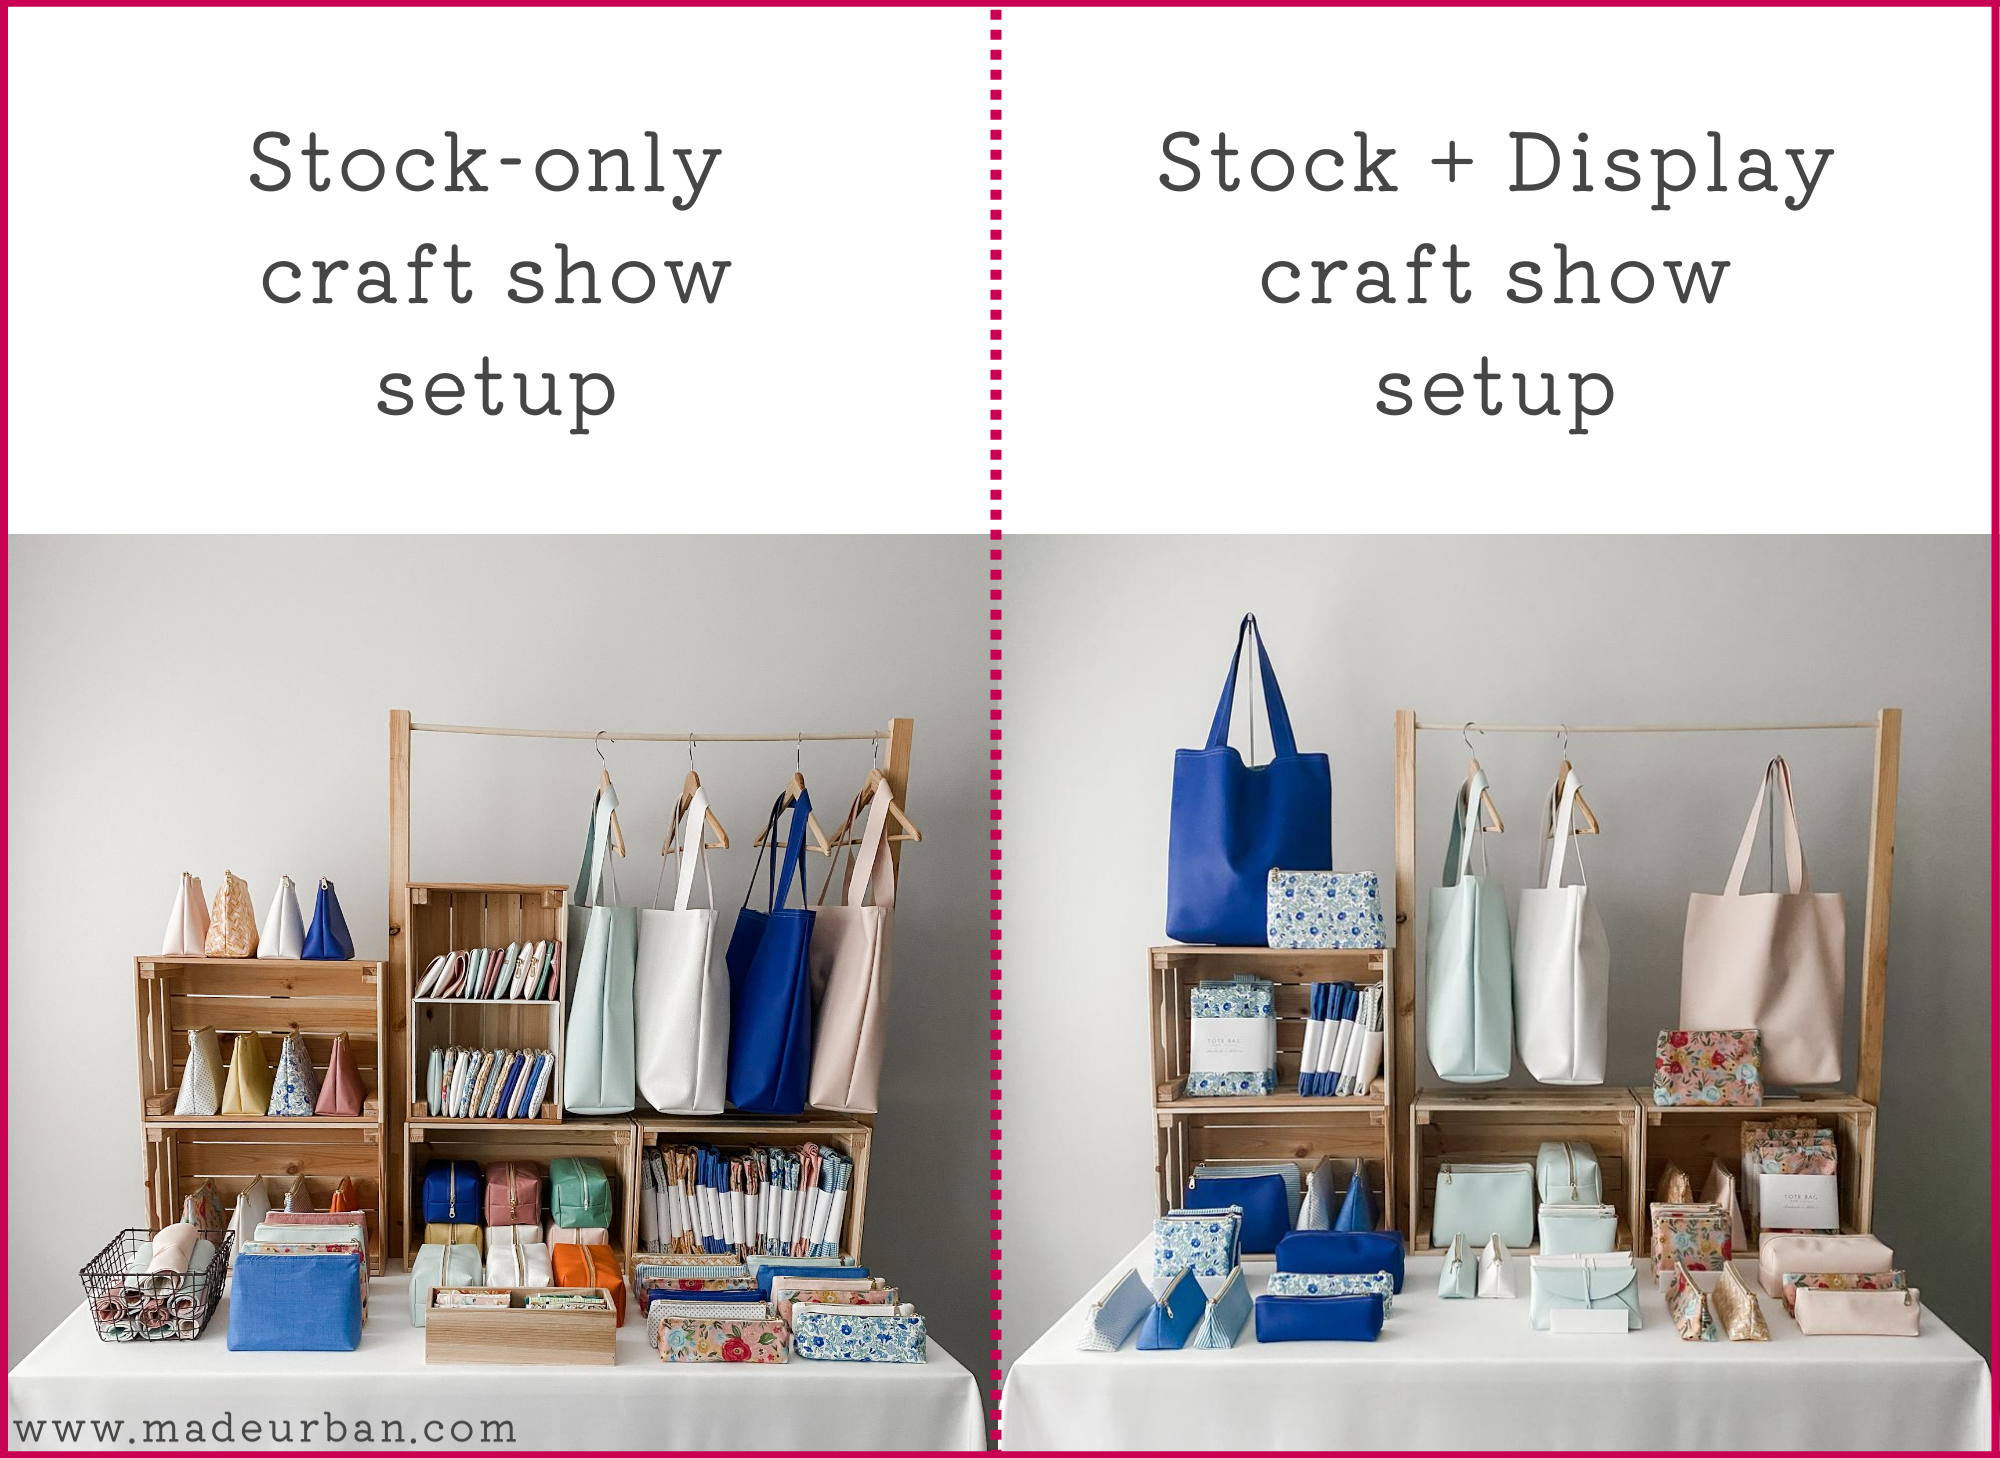 Craft show display stock vs display